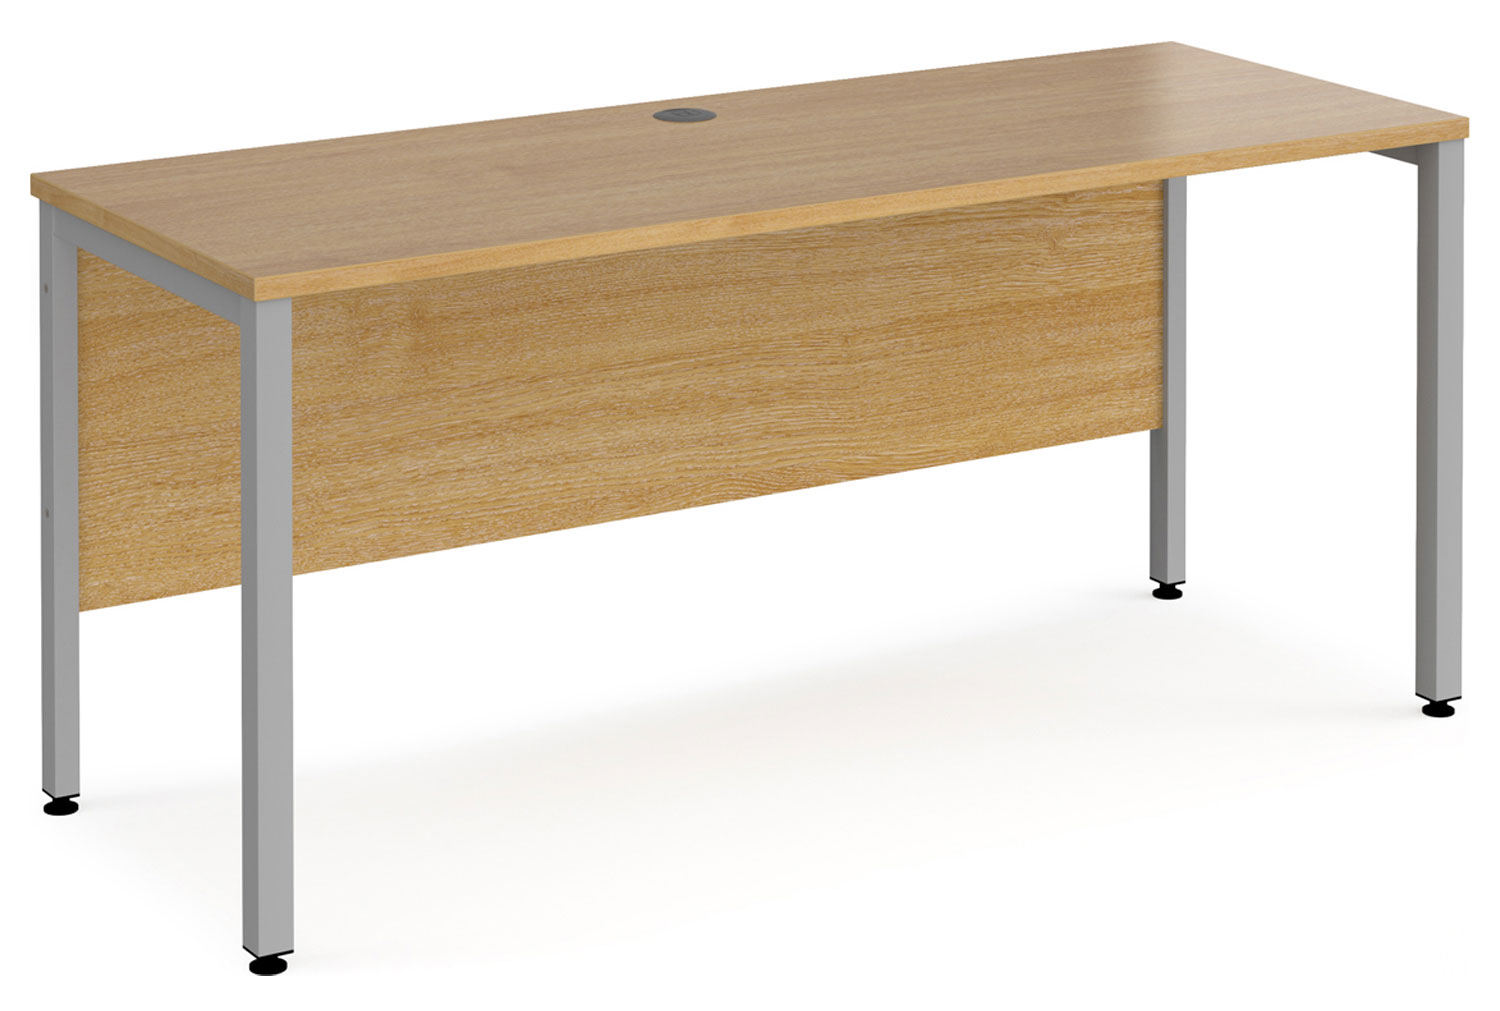 Value Line Deluxe Bench Narrow Rectangular Office Desks (Silver Legs), 160w60dx73h (cm), Oak